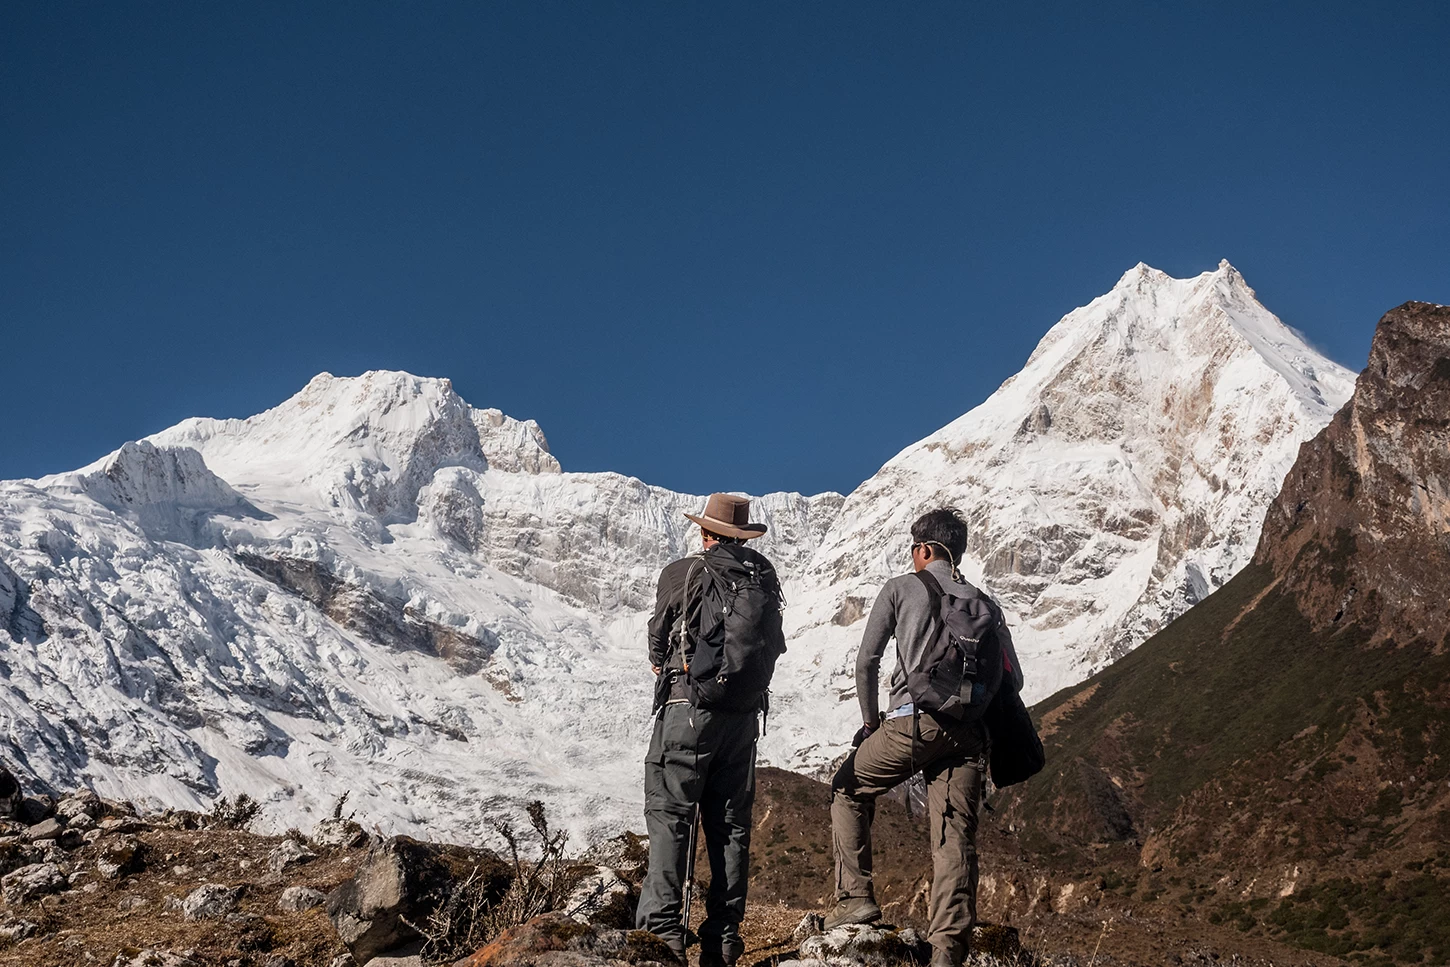  The Journey to Mount Manaslu, Nepal 